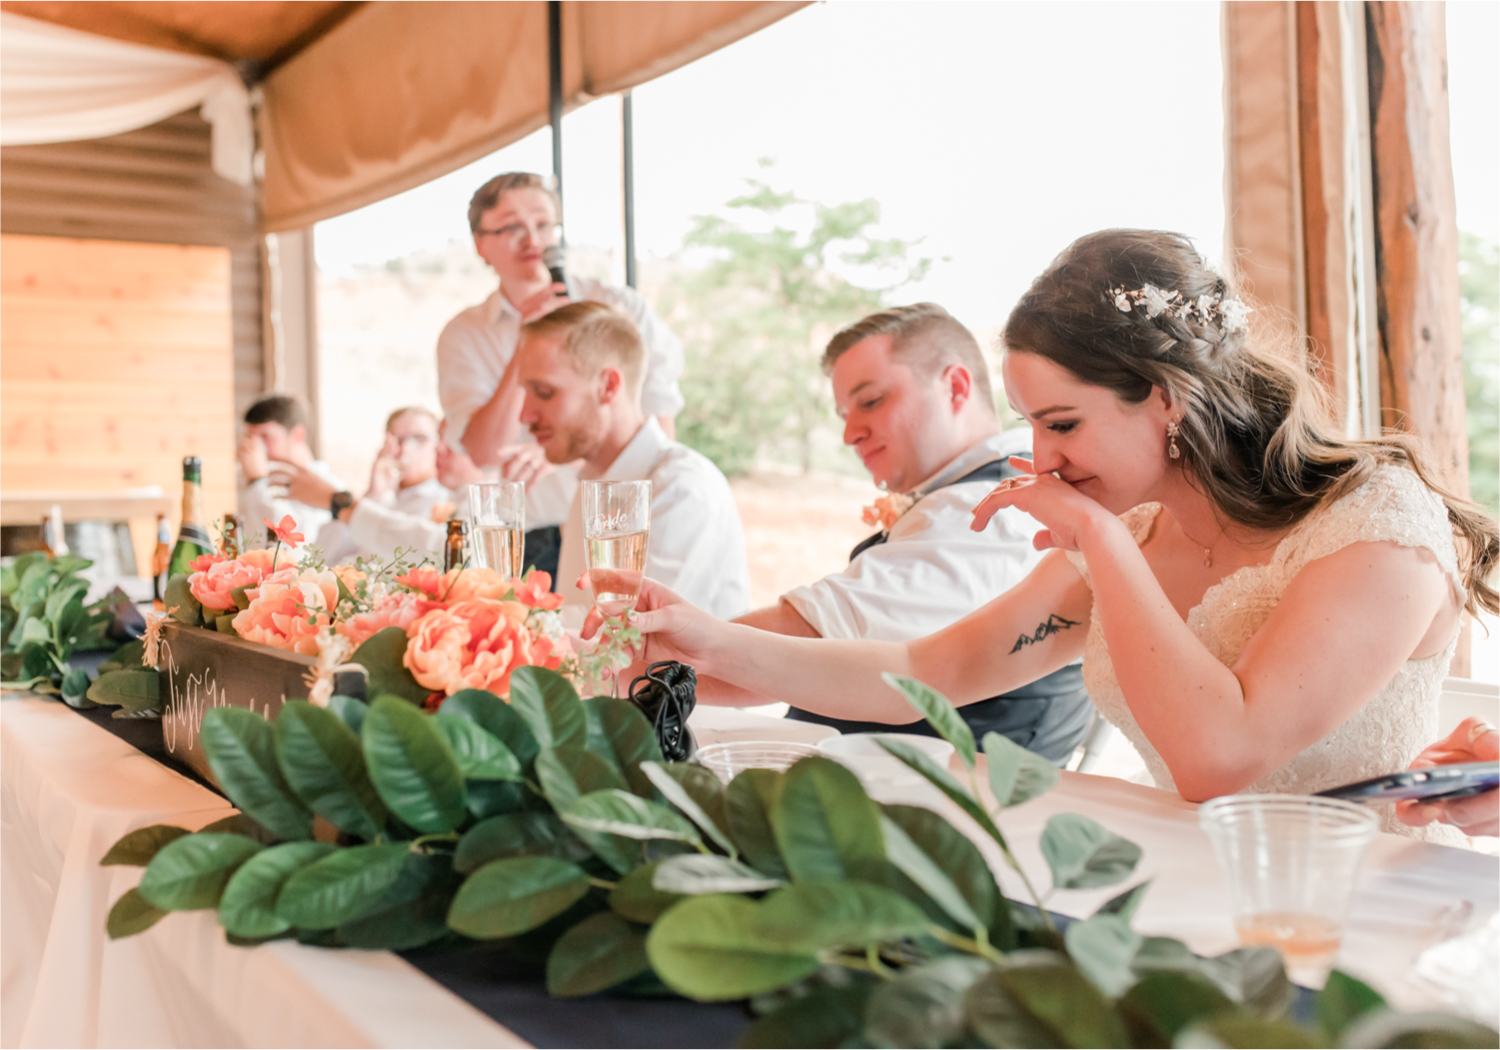 Summer Ellis Ranch Wedding in Loveland Colorado | Britni Girard Photography | Wedding Photo and Video Team | Rustic Head Table Toasts